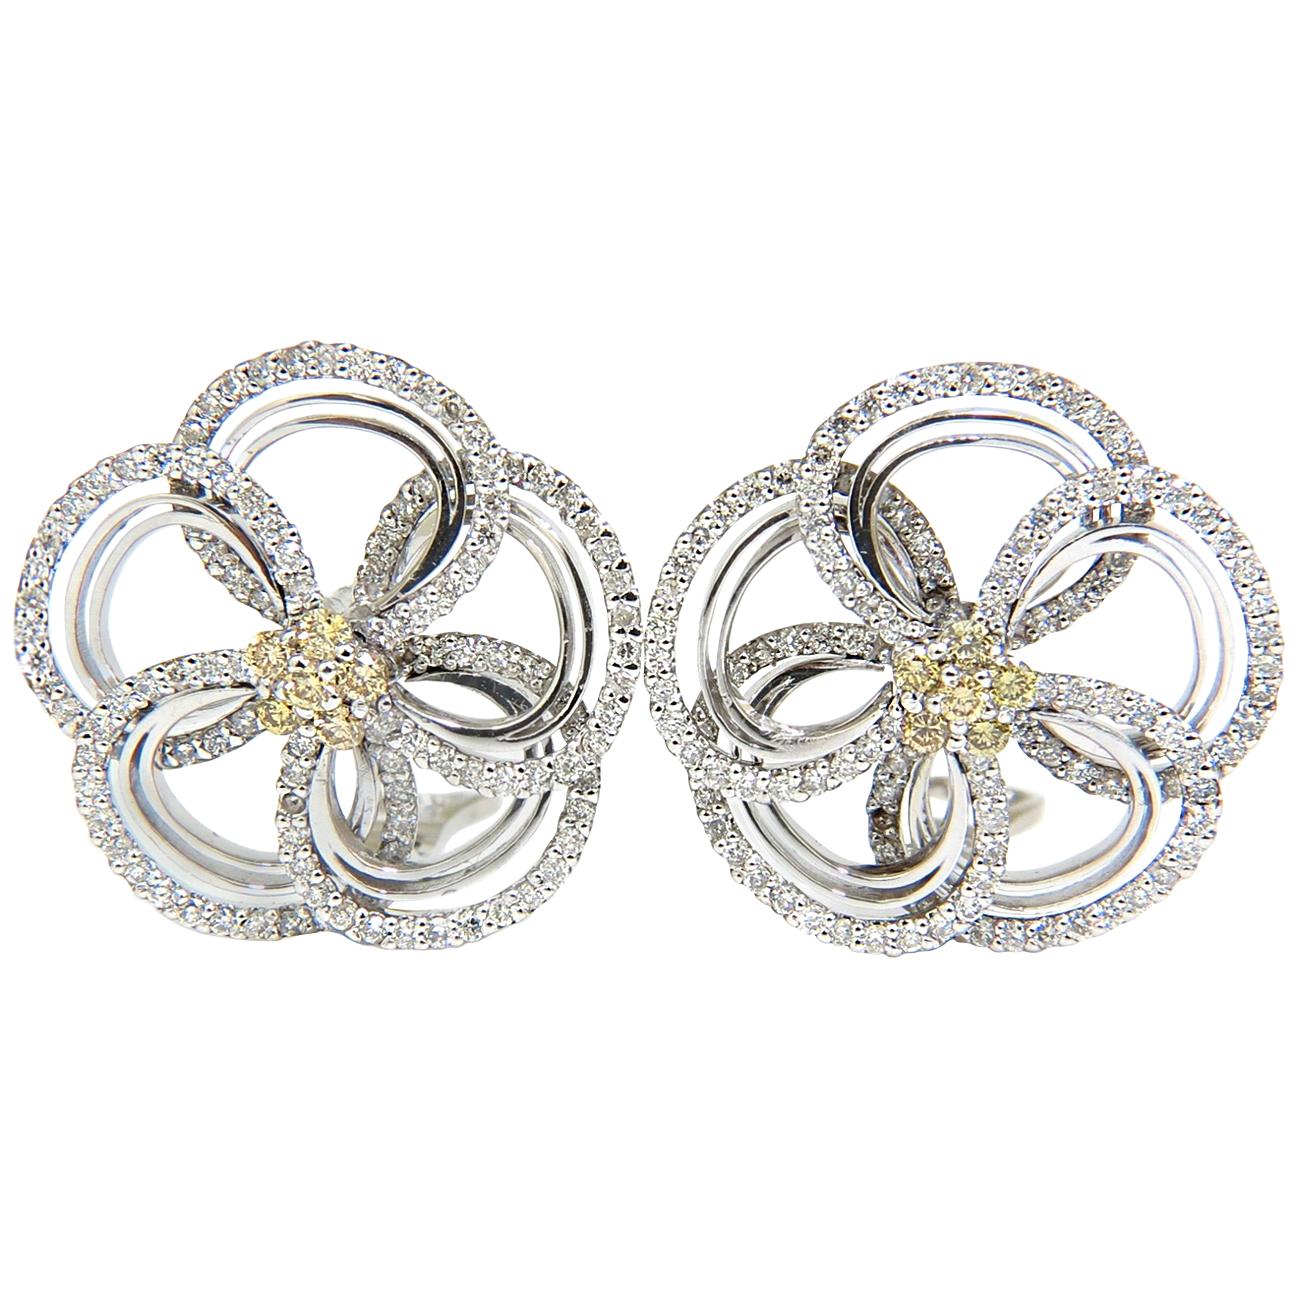 Boucles d'oreilles en or 14 carats avec grappe de fleurs en diamants jaunes naturels de 2,40 carats